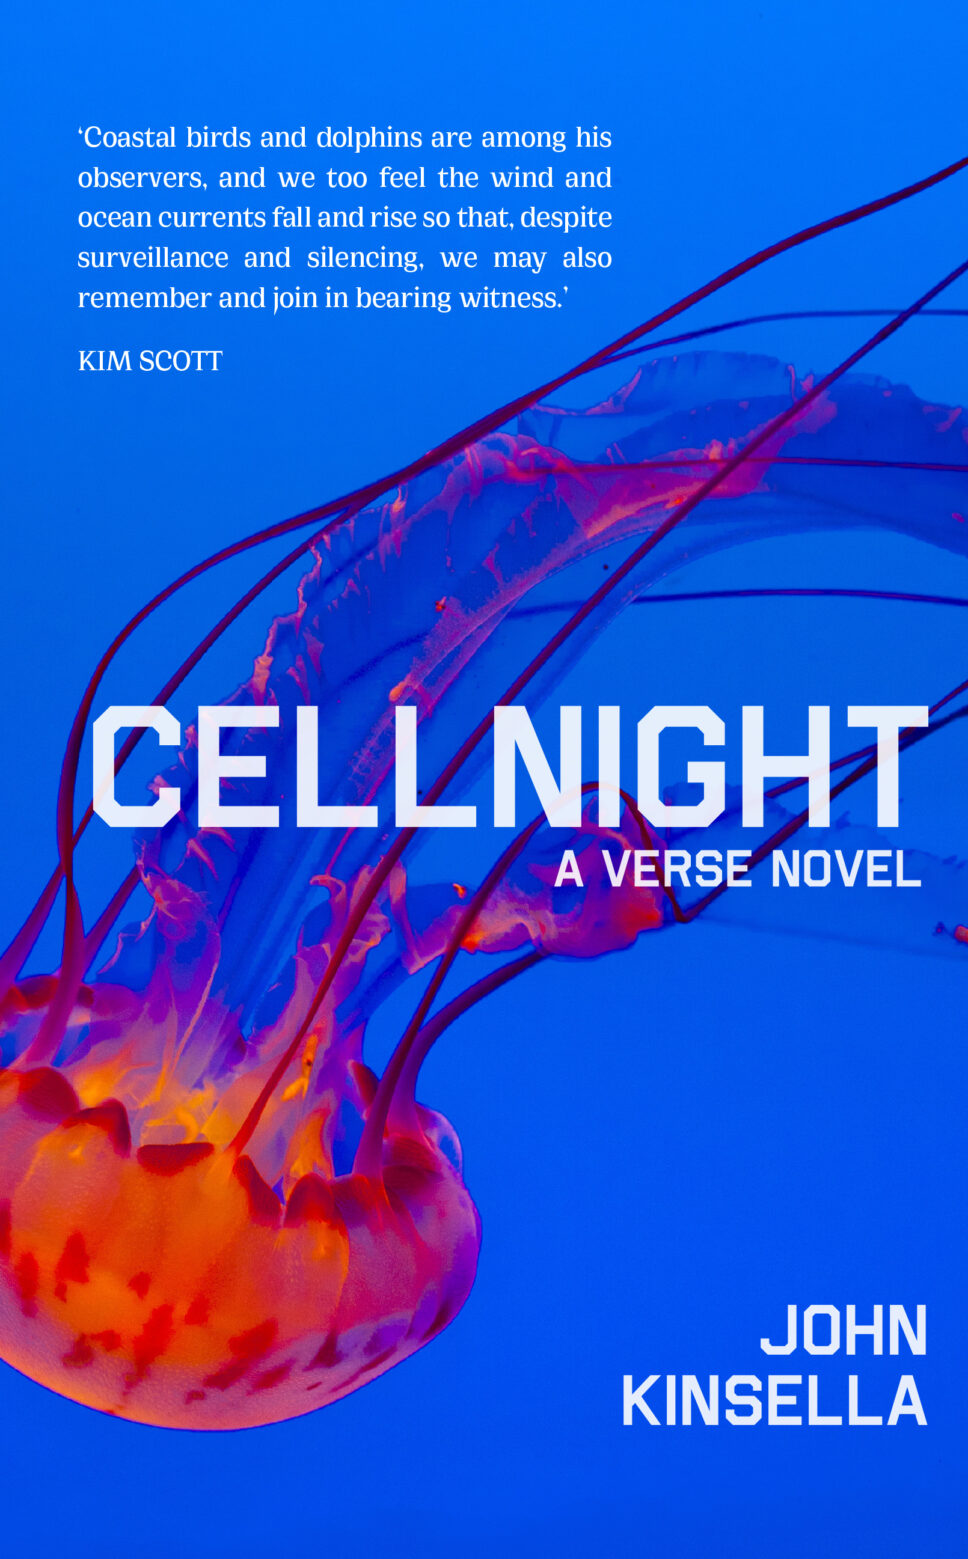 Cellnight: A verse novel